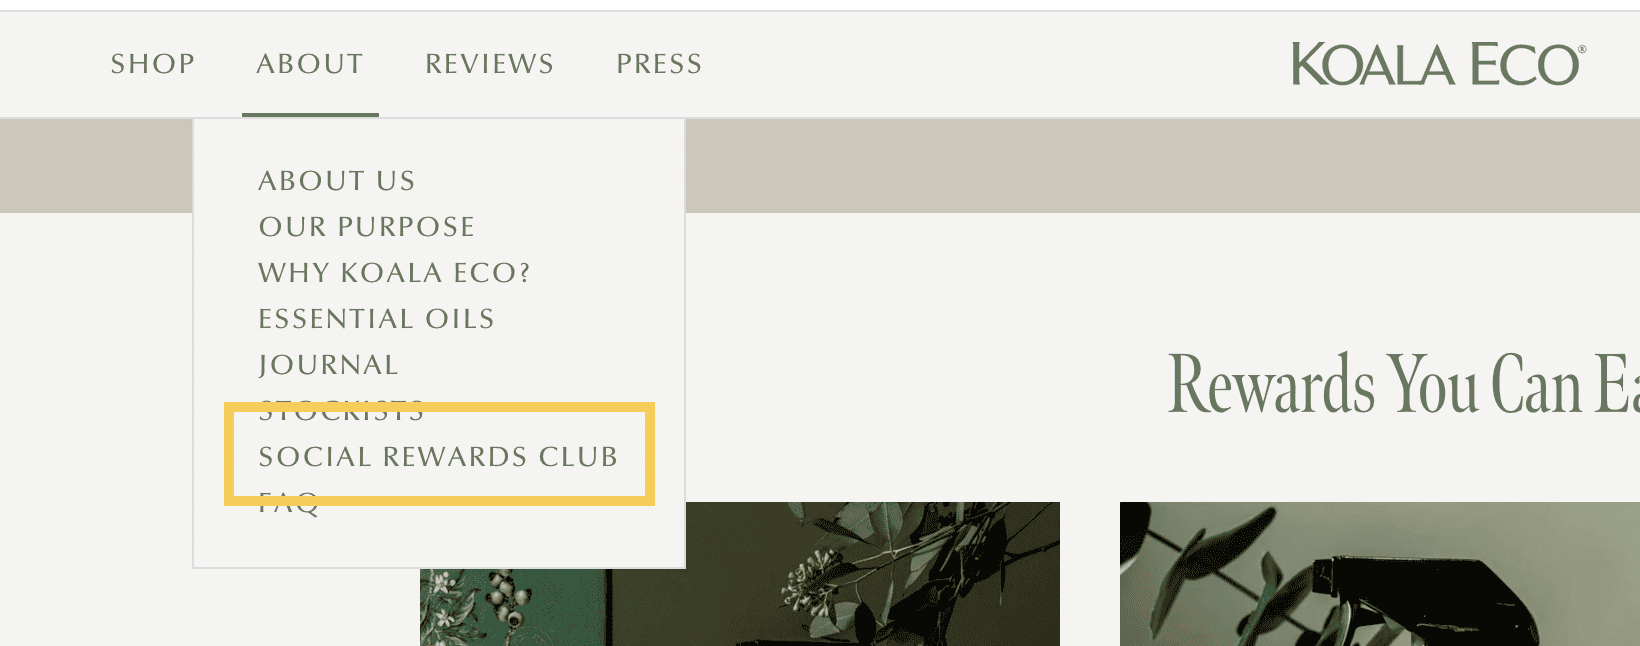 Koala Eco promotes their Social Rewards Club in their navigation bar